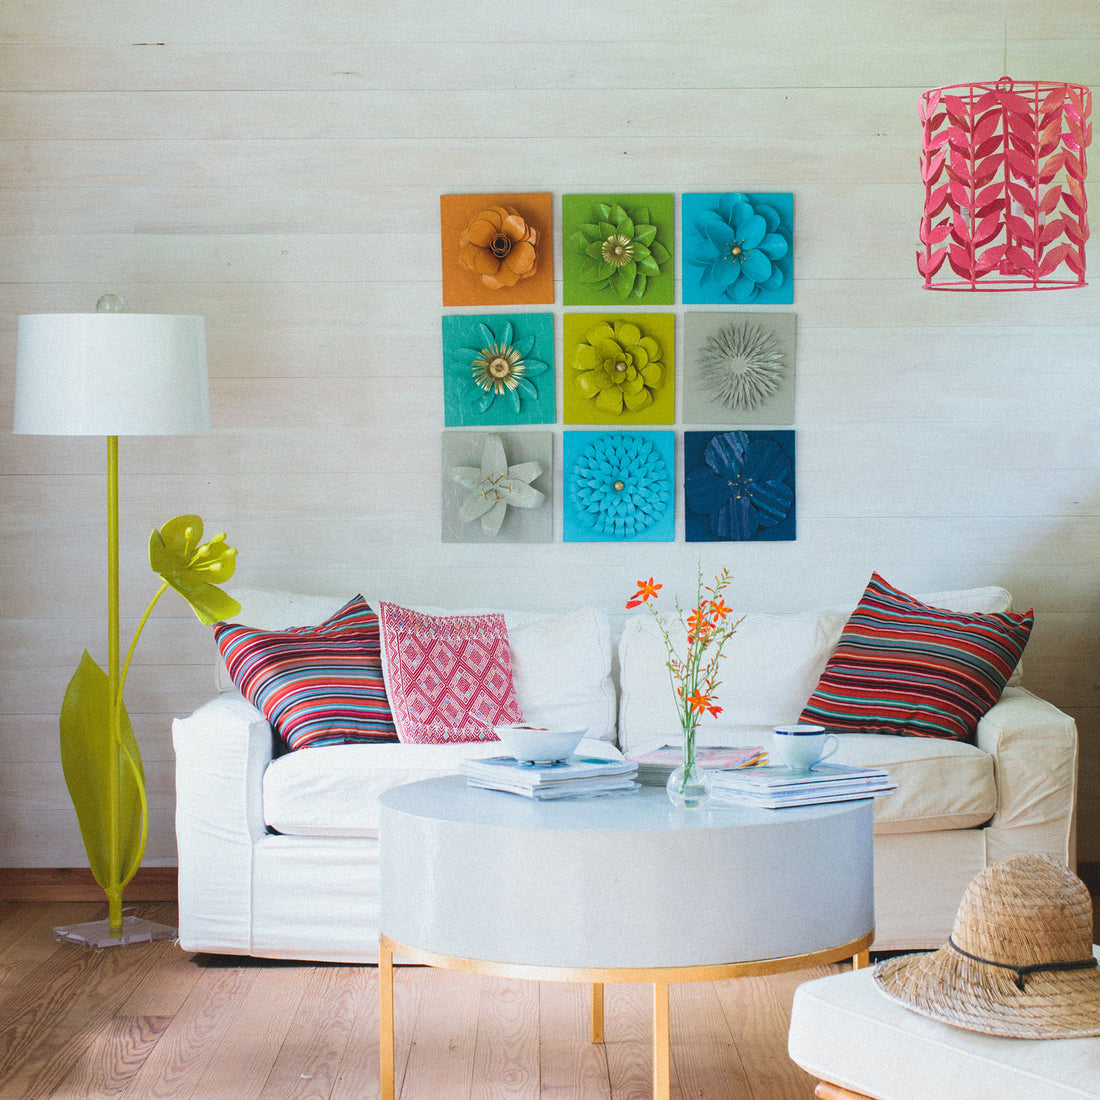 Lotus Flower Wall Tile in bright living room